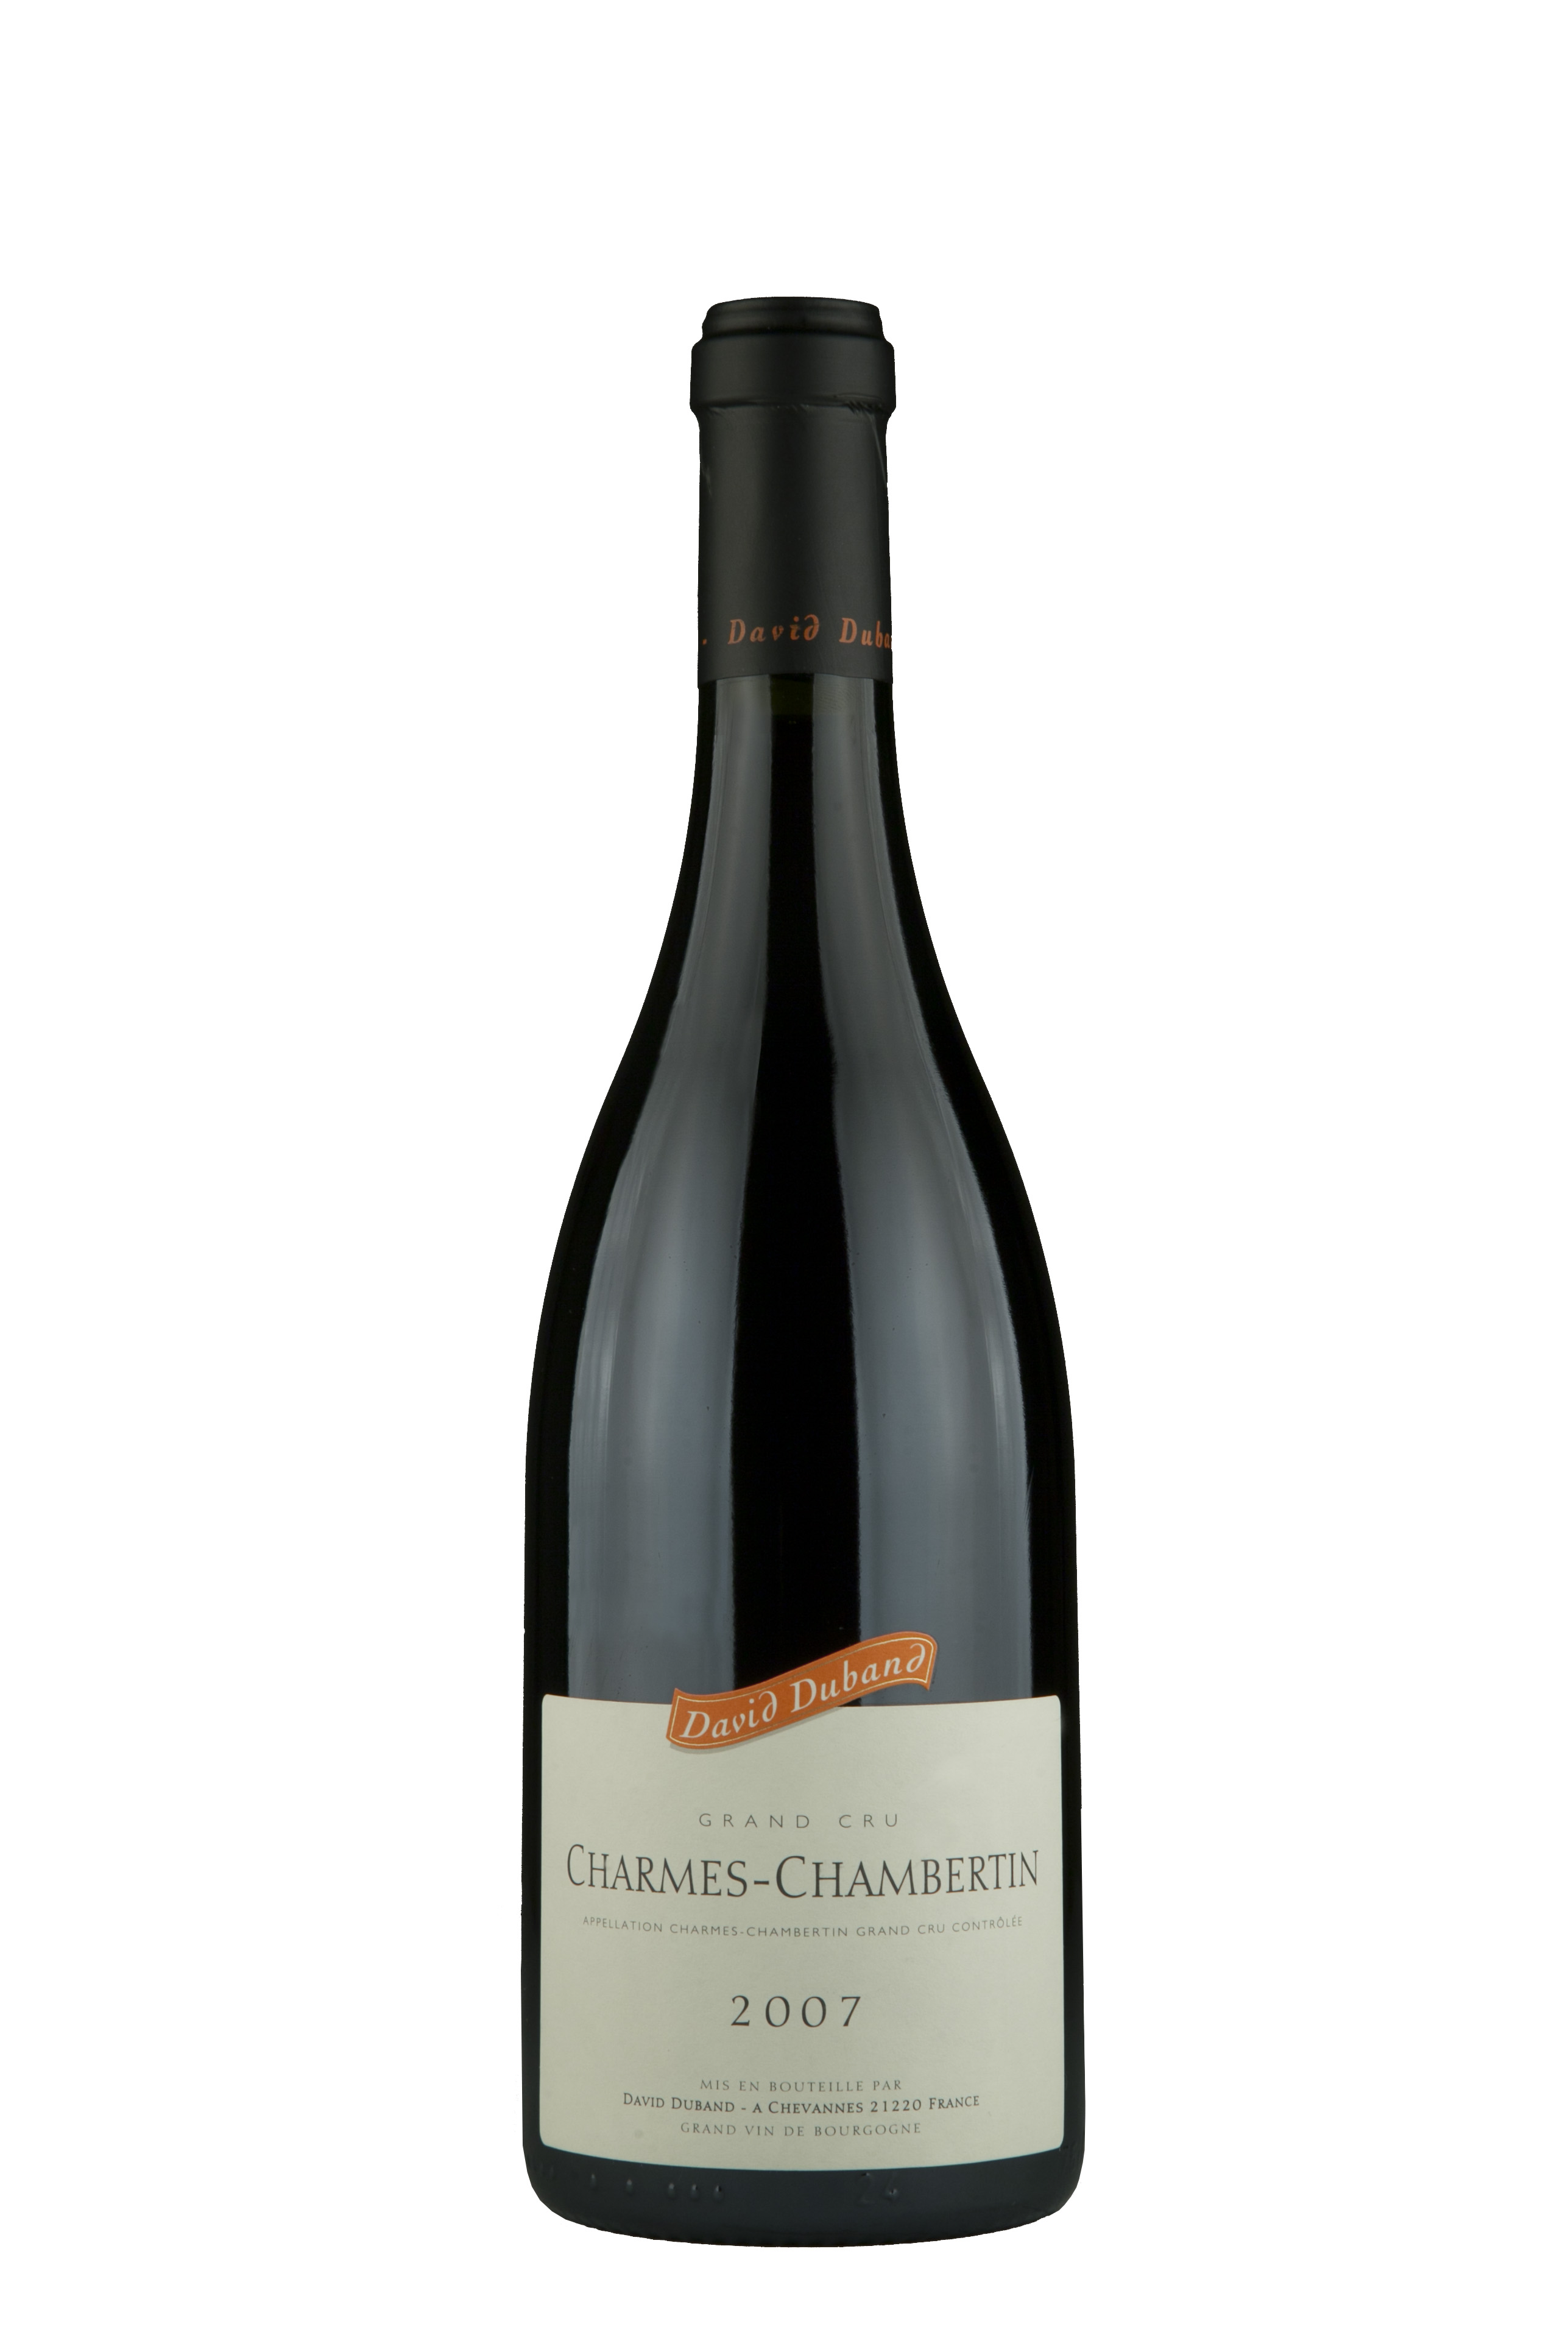 Charmes-Chambertin Grand Cru Domaine David Duband 2007